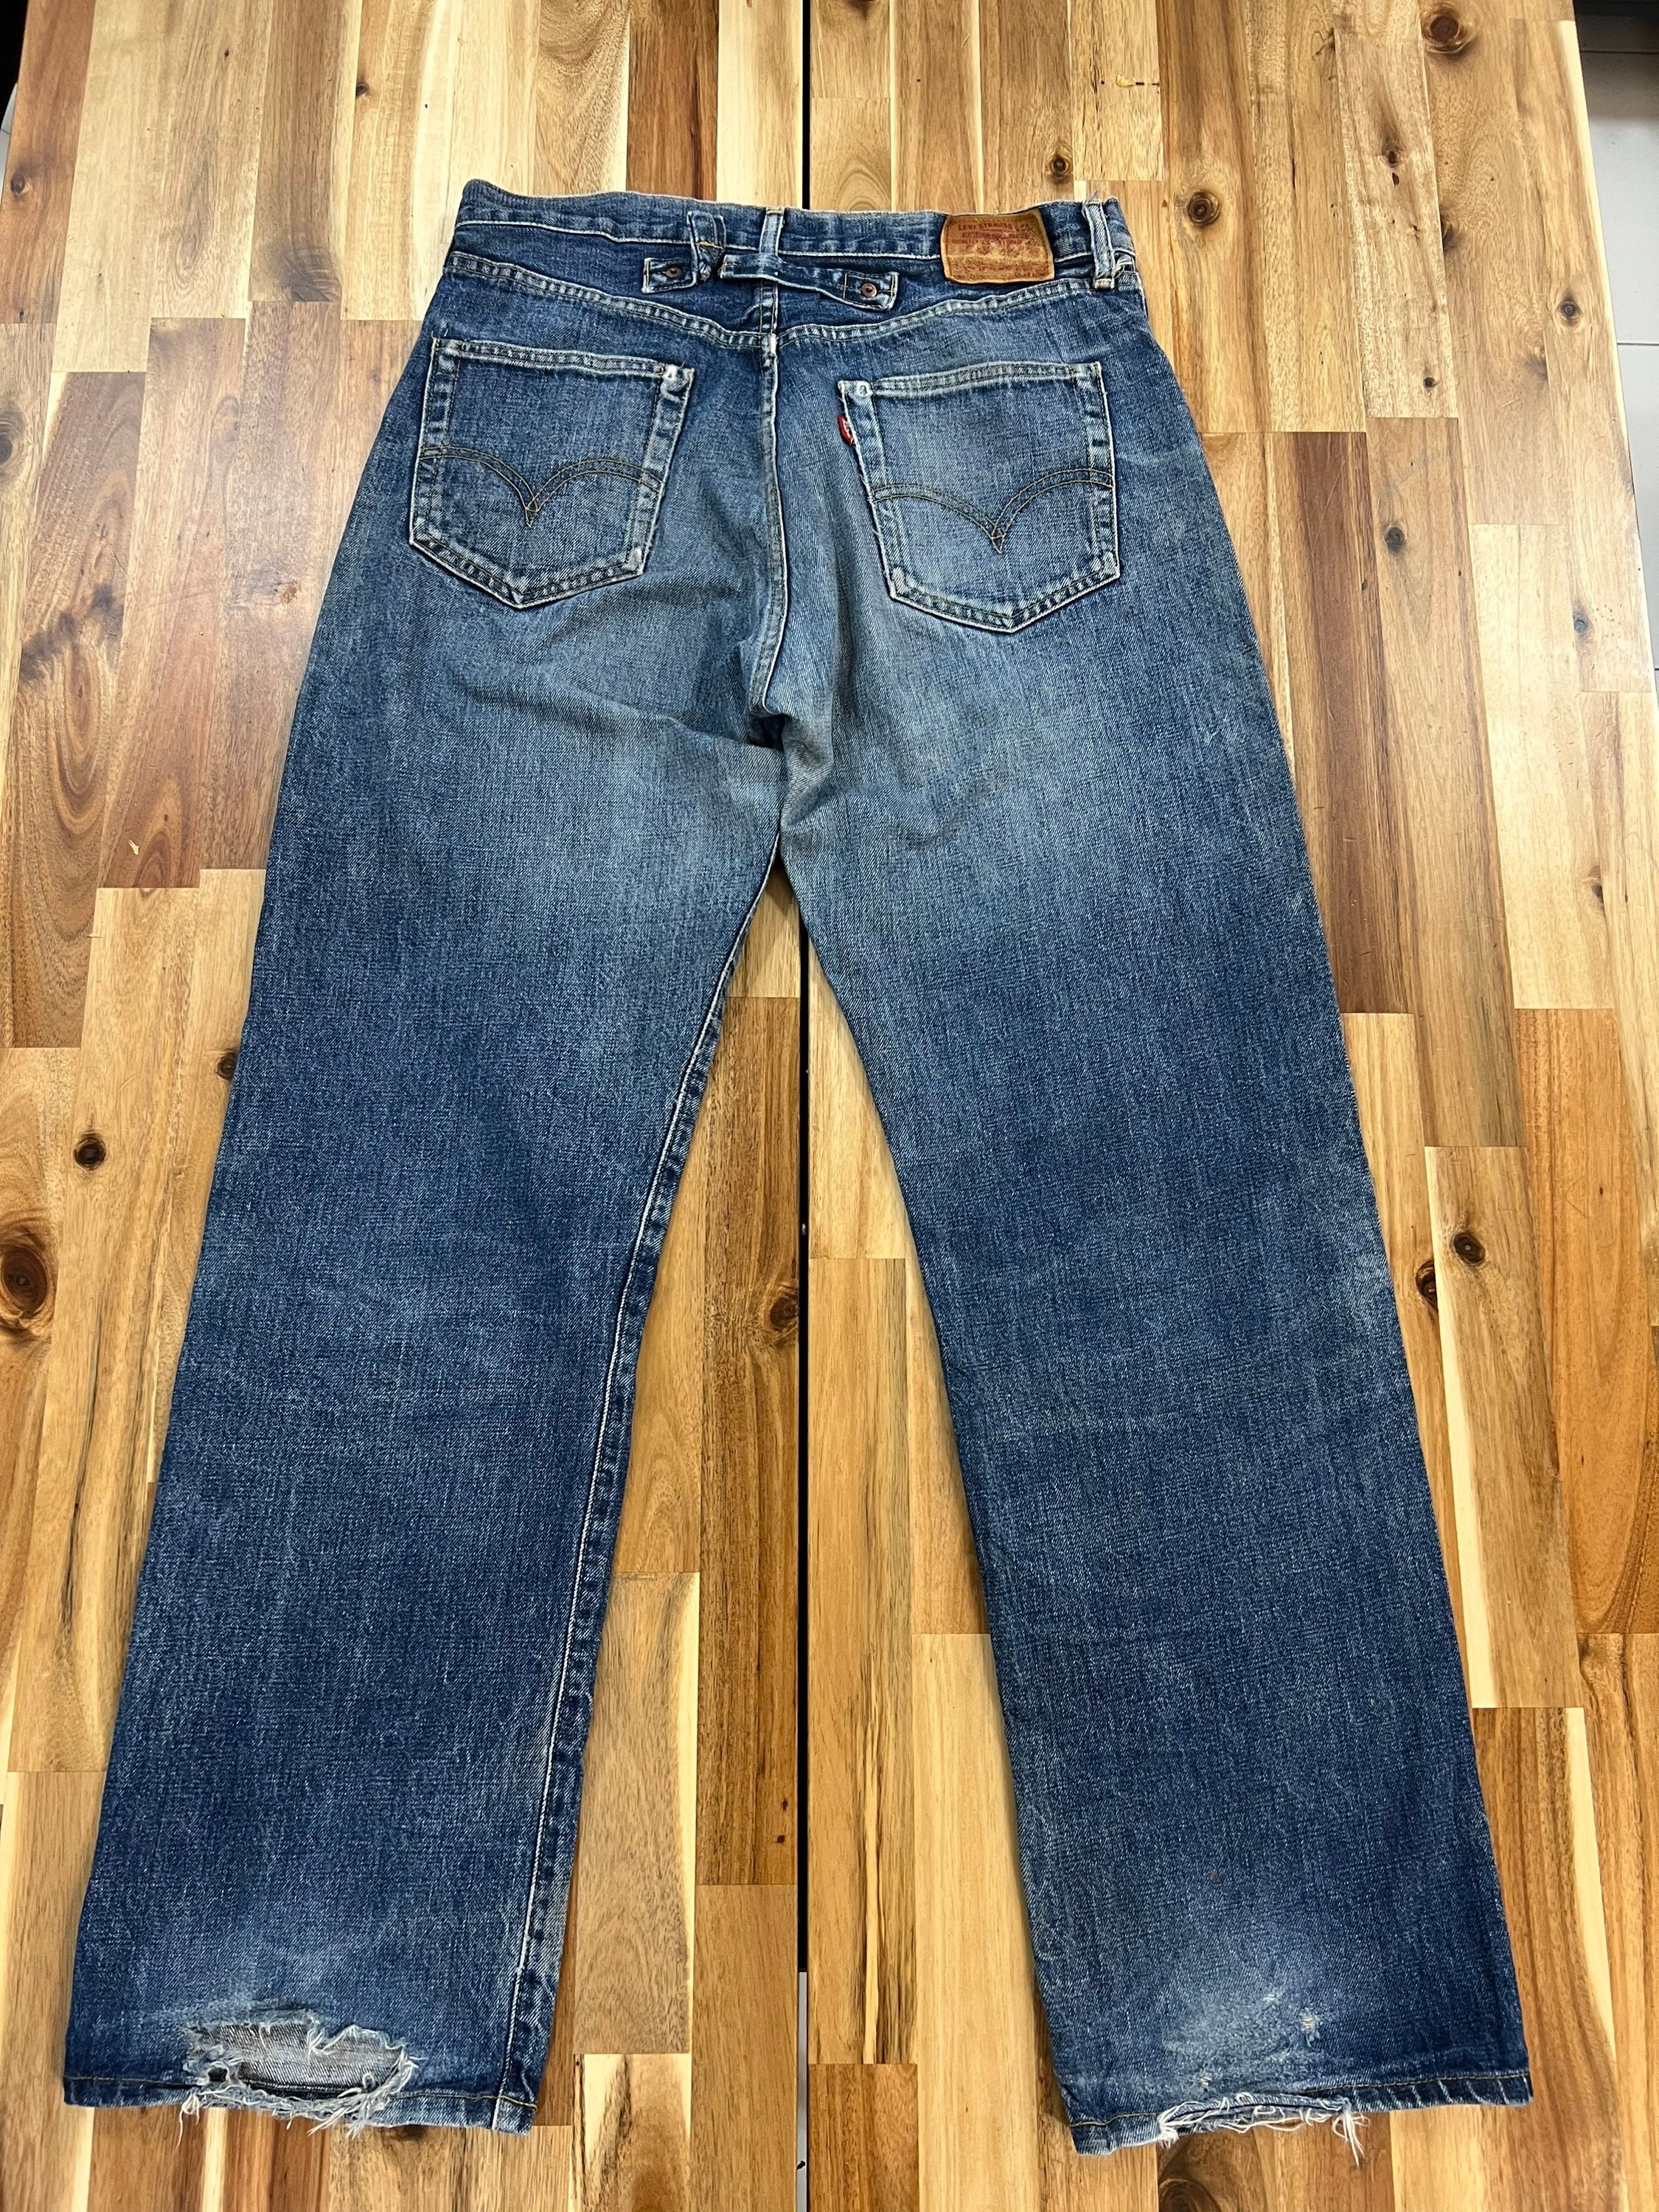 Vintage Levis 702 Big E Selvedge Distressed Denim Jeans - Etsy